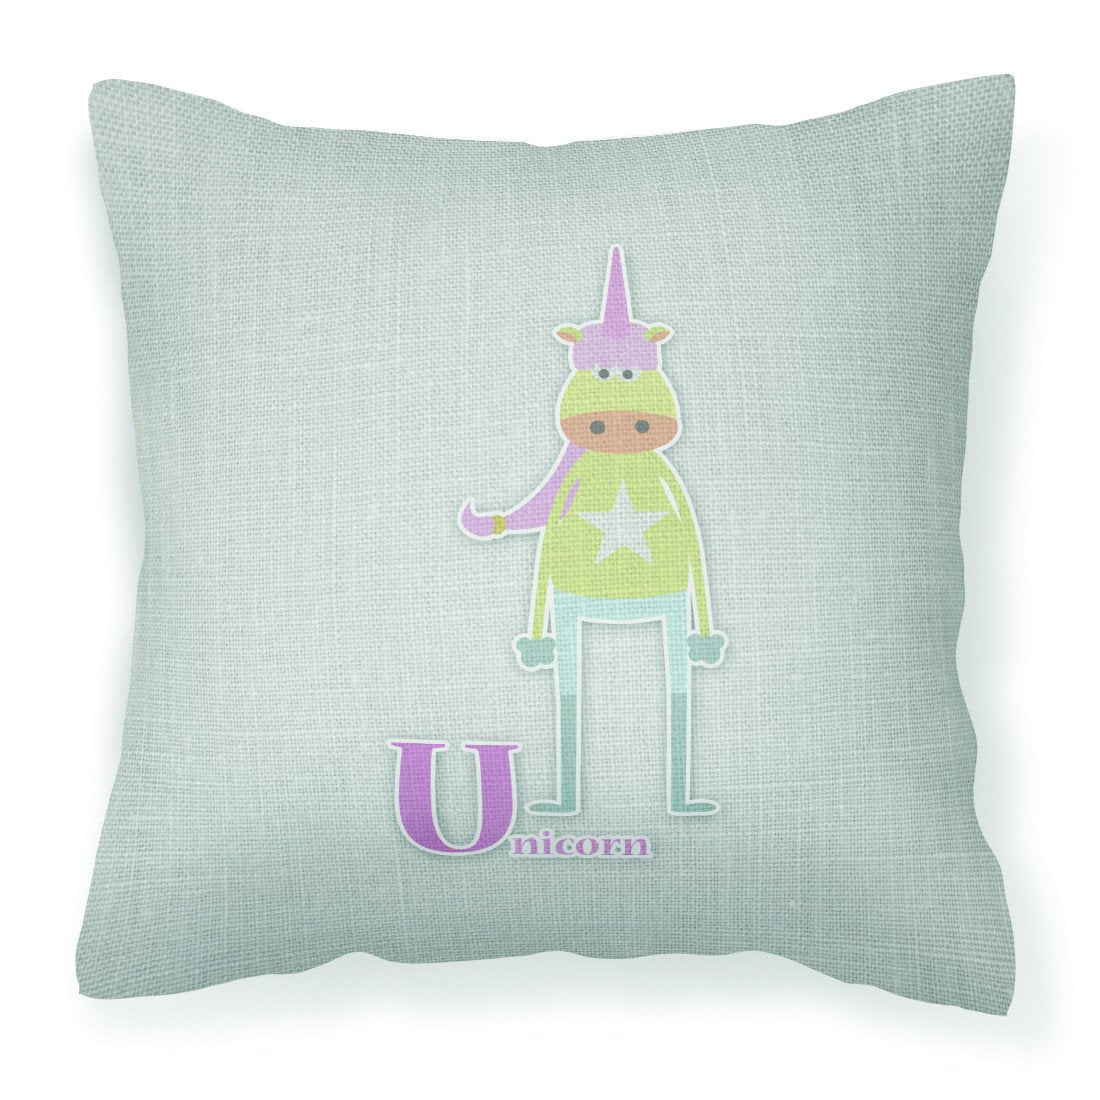 Alphabet U for Unicorn Fabric Decorative Pillow BB5746PW1818 by Caroline's Treasures